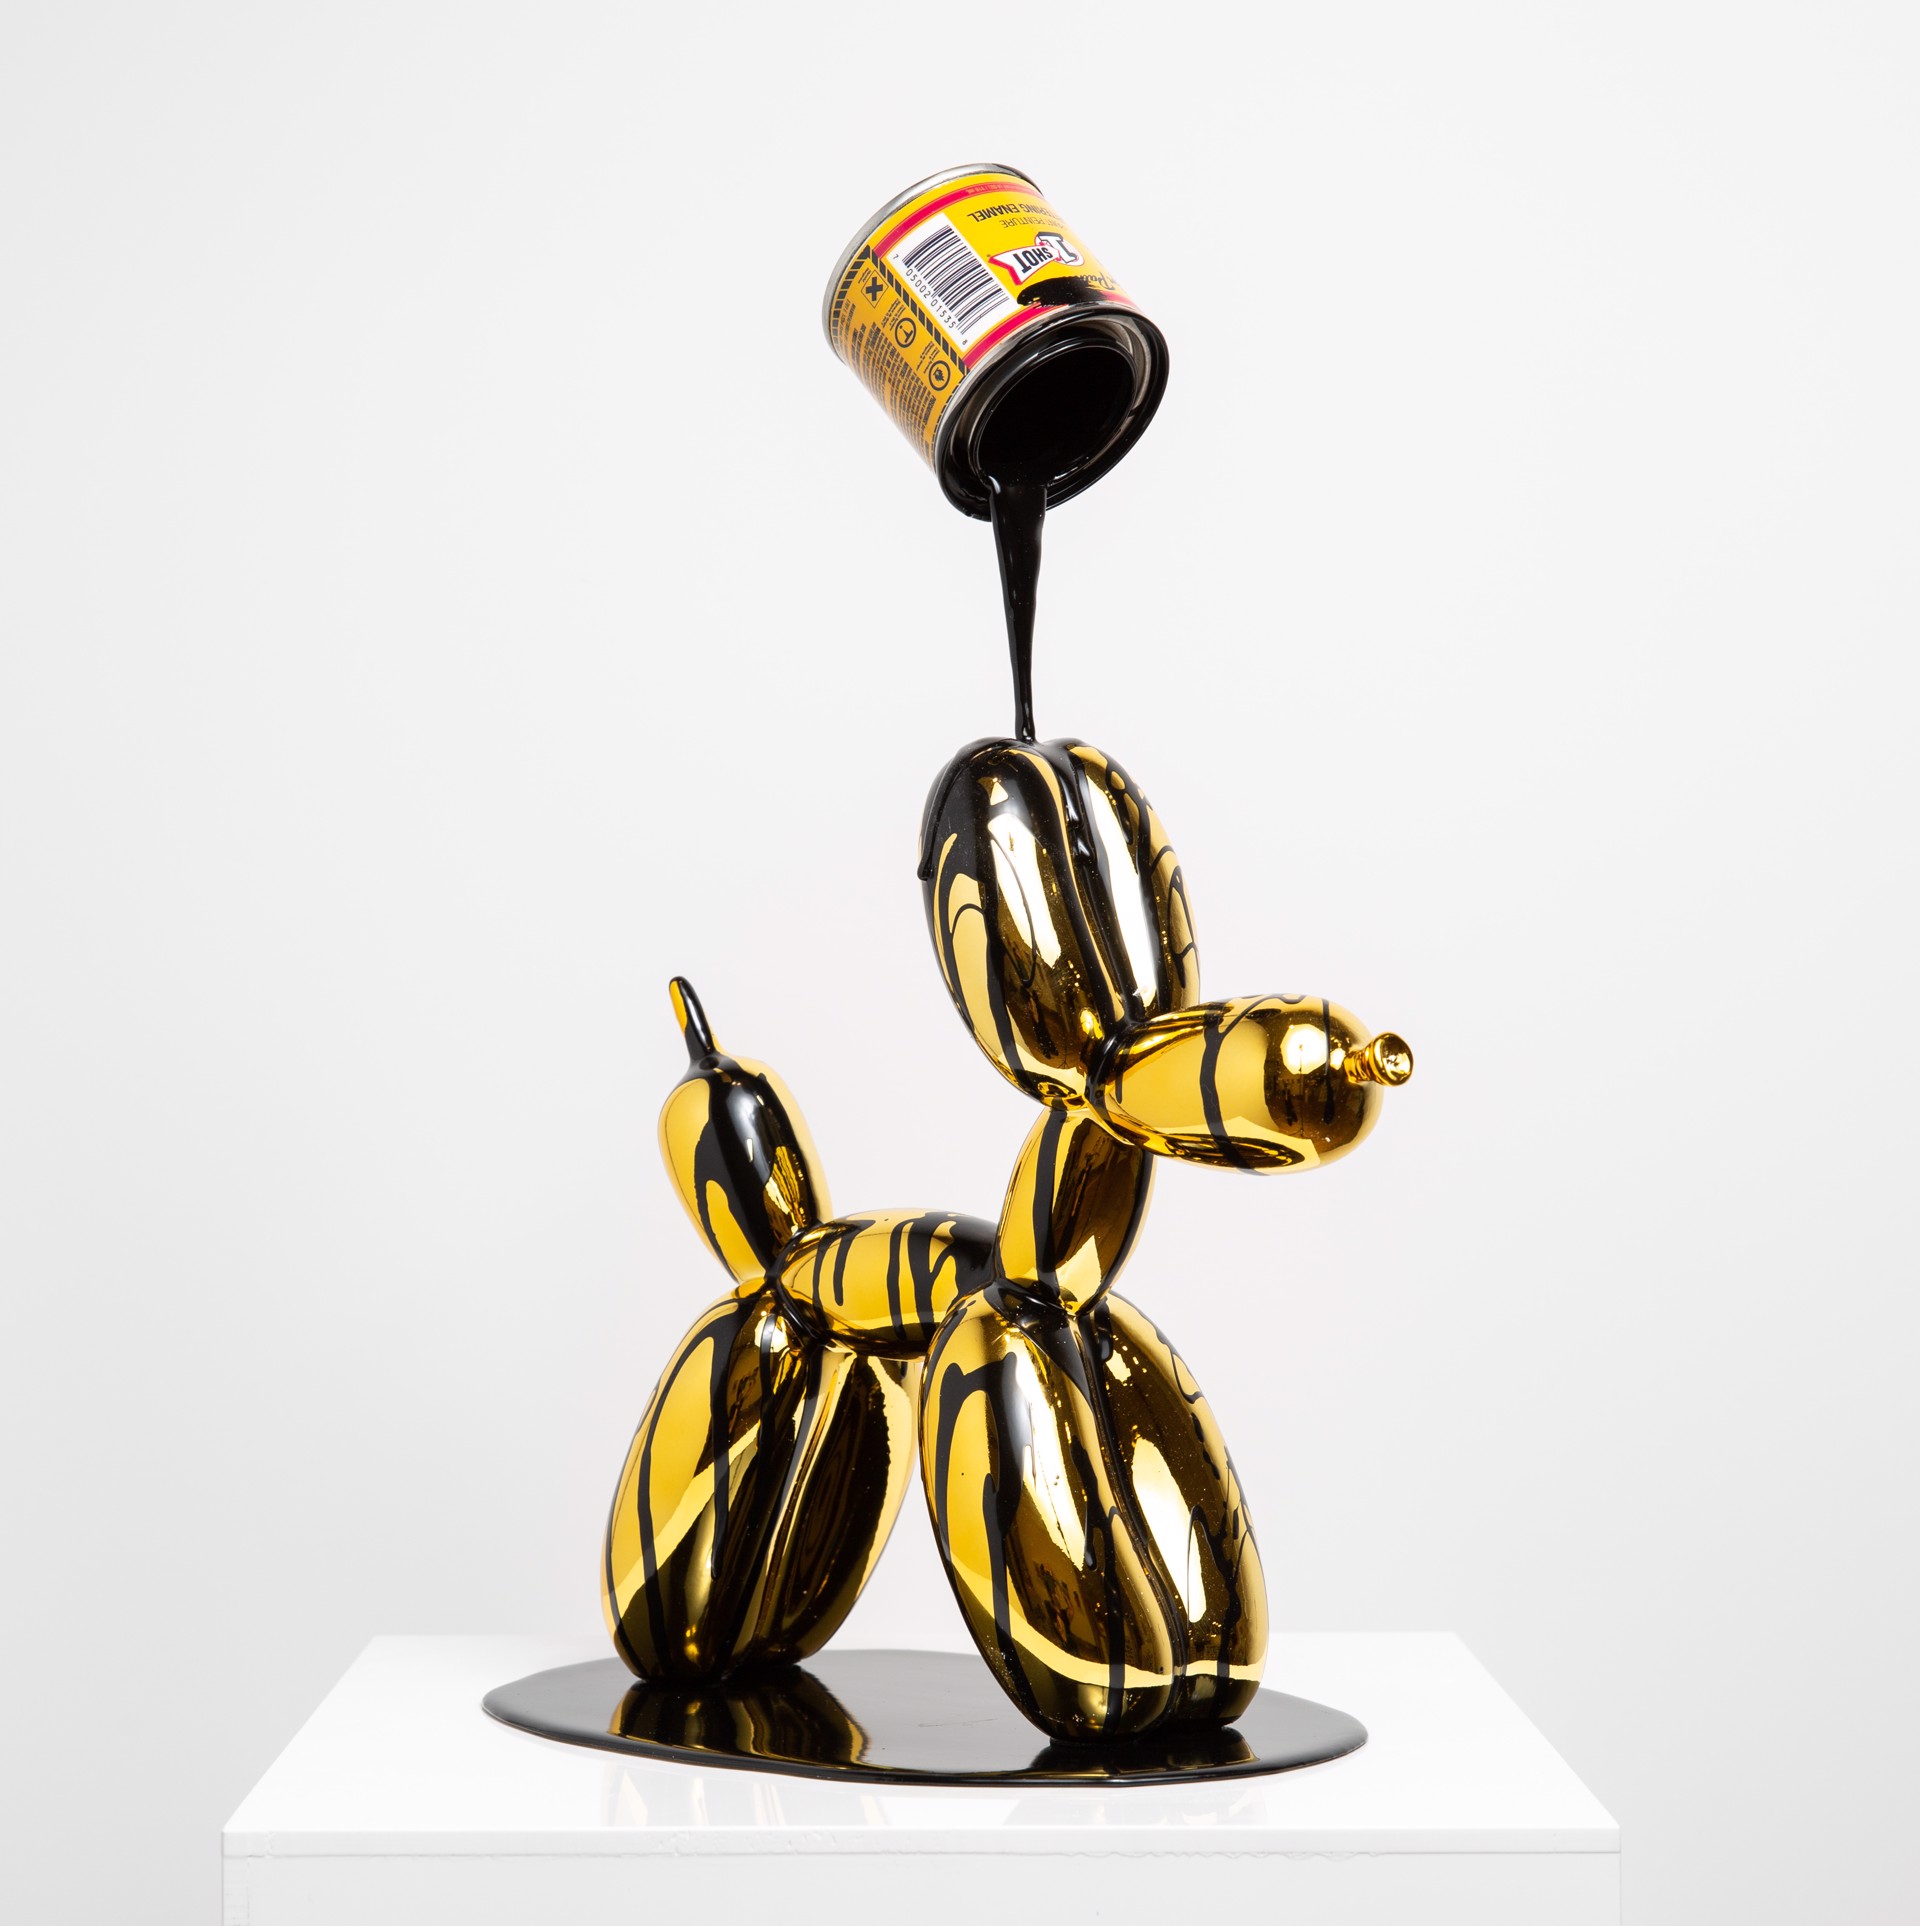 Balloon dog - Gold / Black by Joe Suzuki